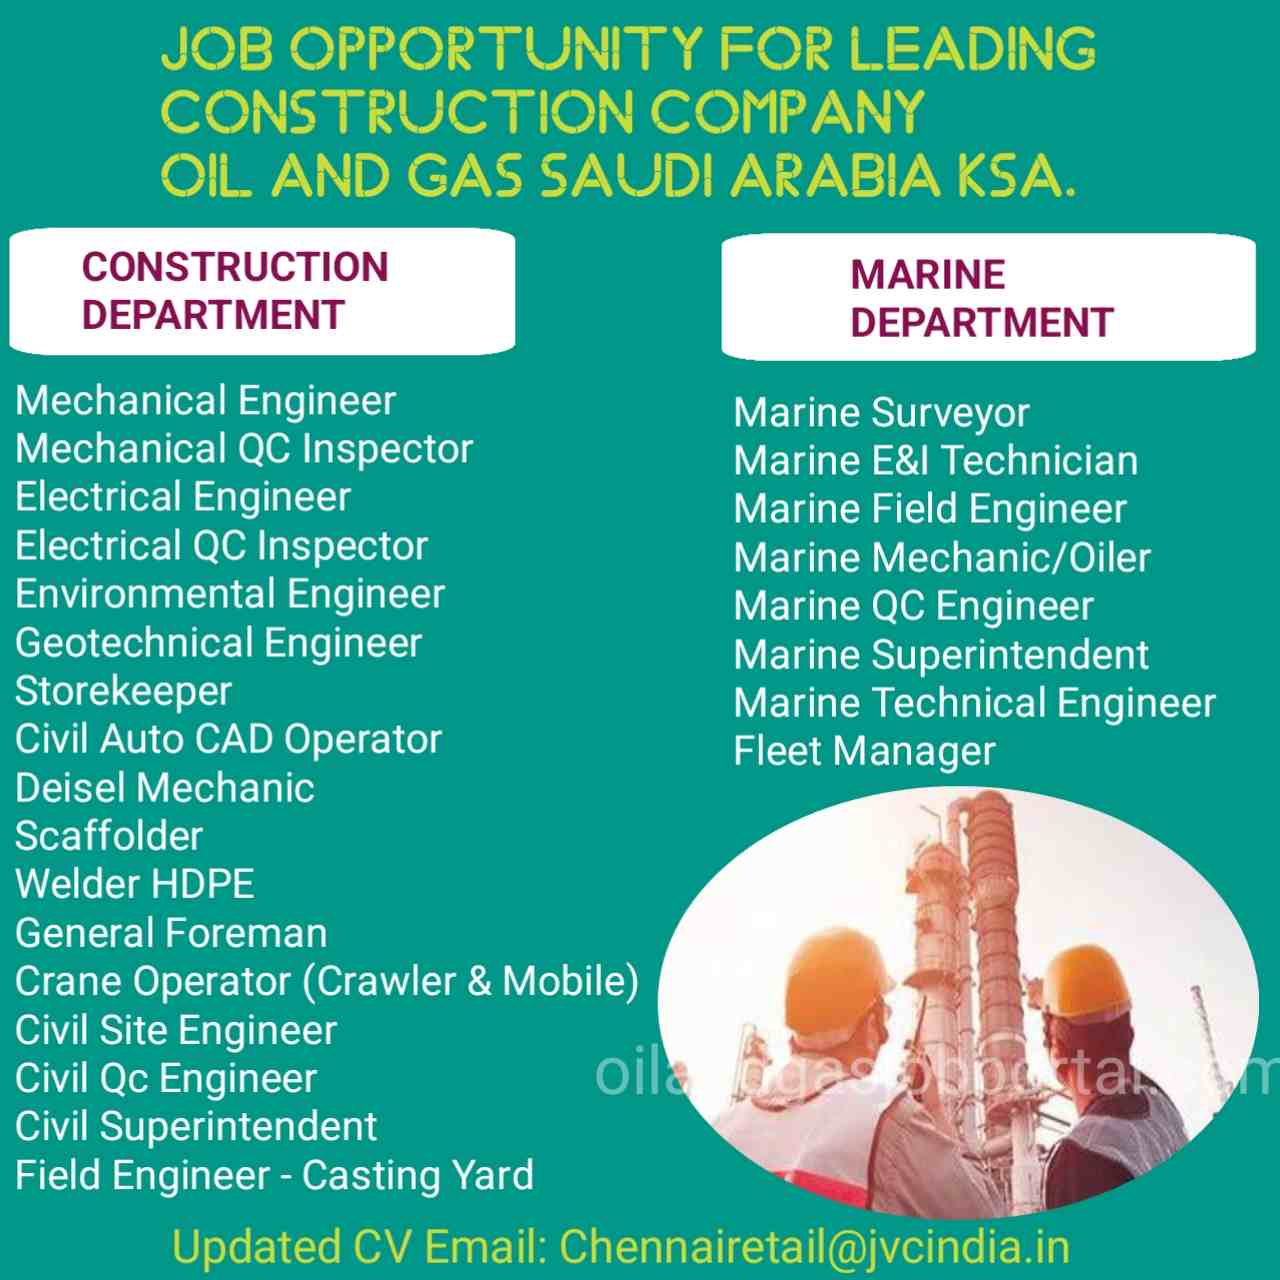 Job Opportunity for Leading Construction Company Oil and Gas Saudi Arabia KSA.